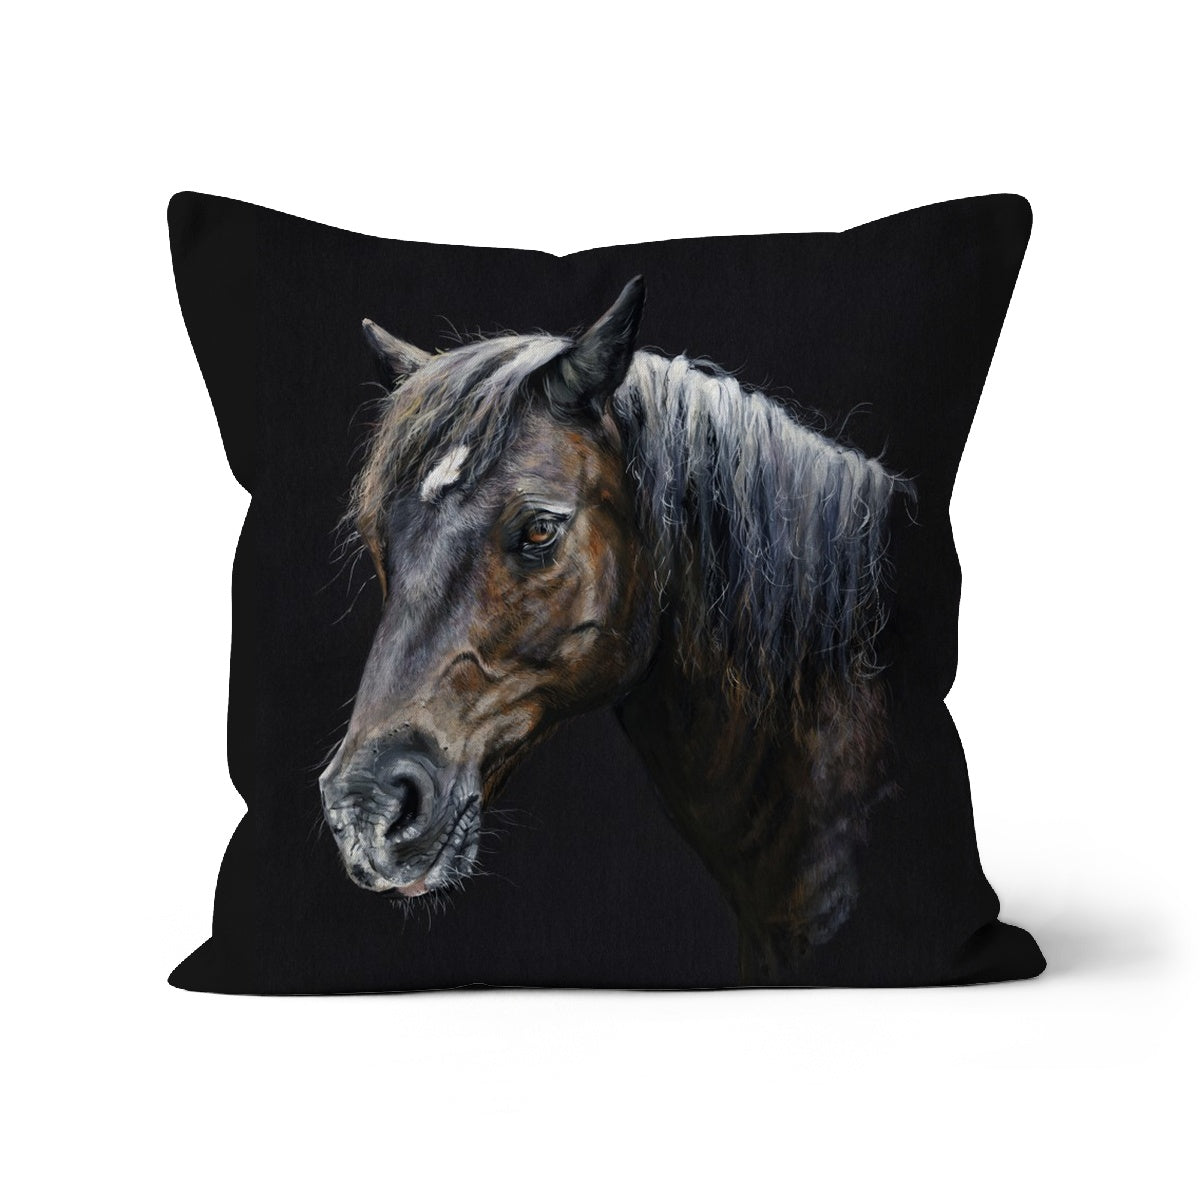 Merlin the Welsh Pony Cushion